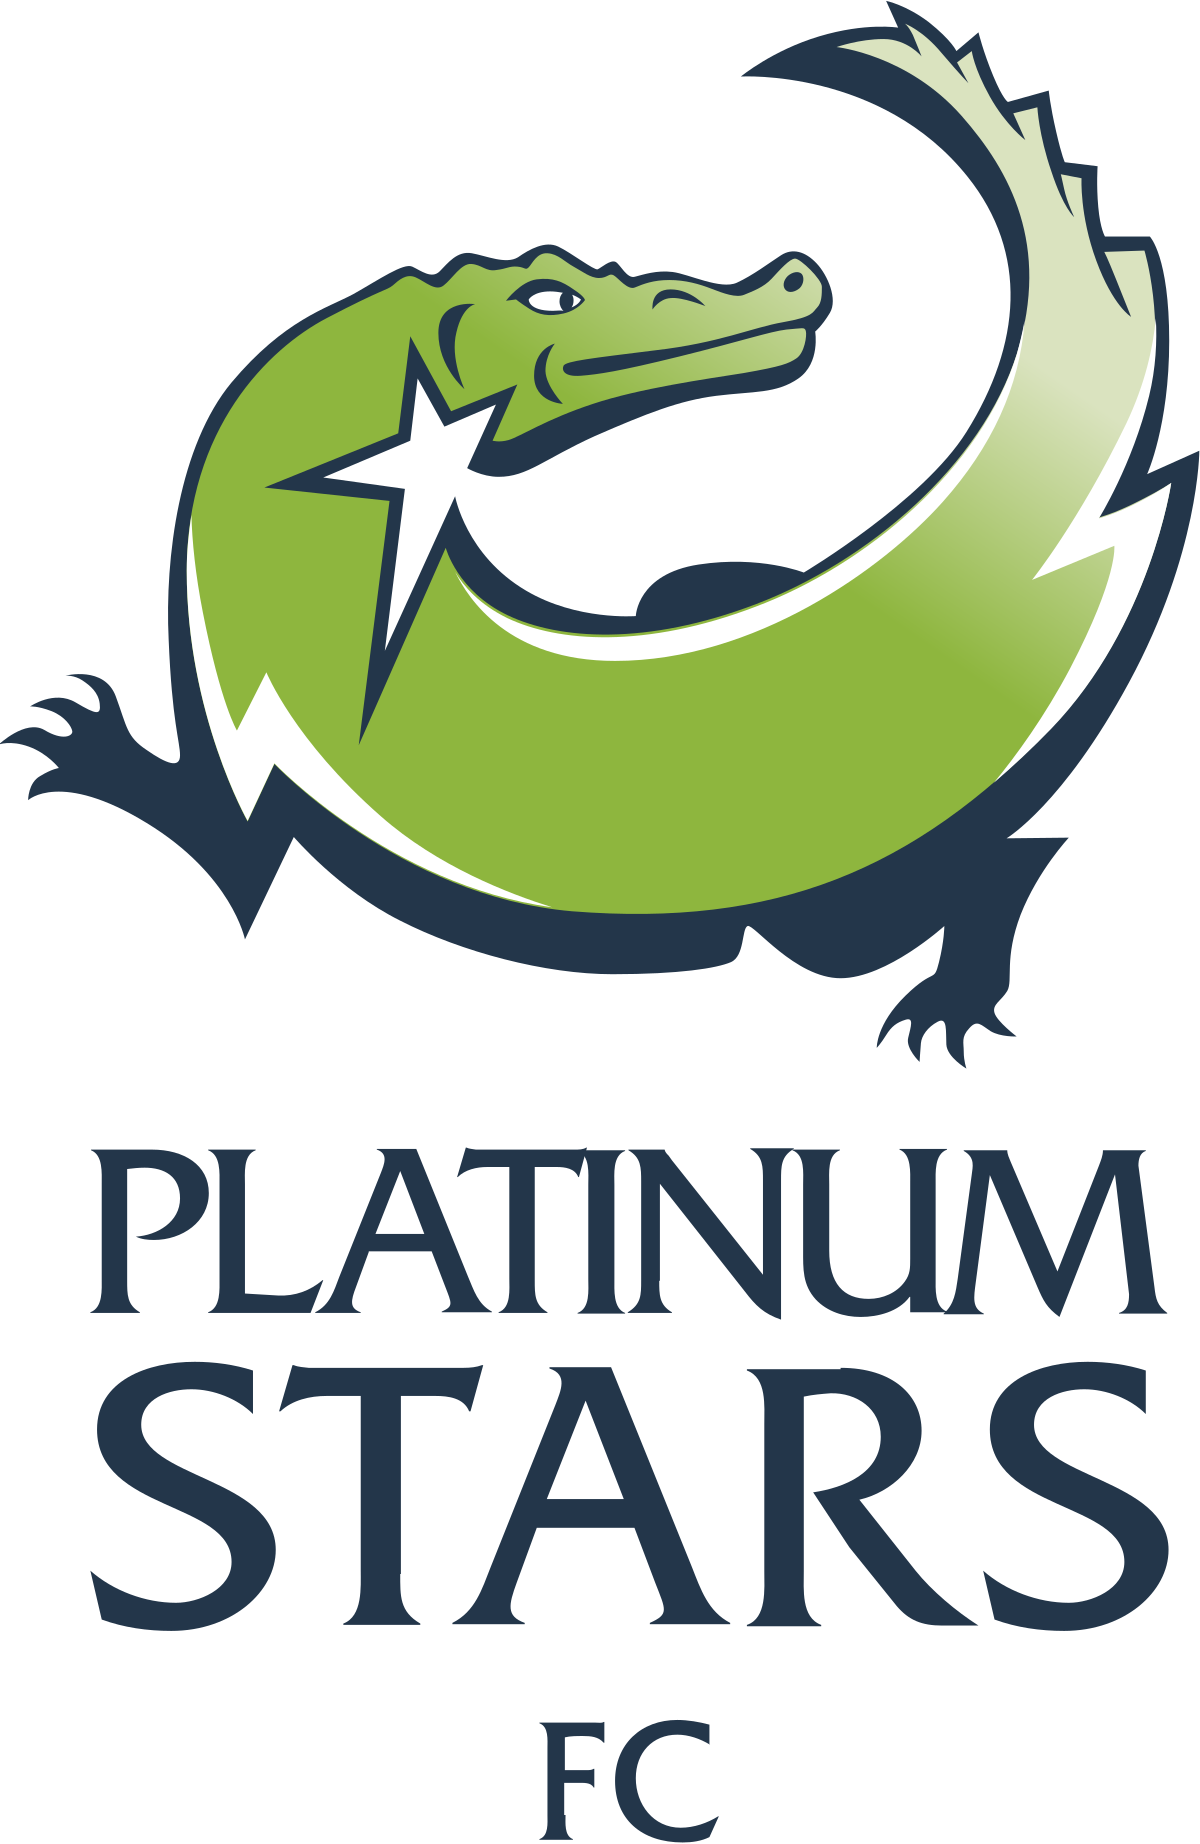 Platinum Stars Football Club